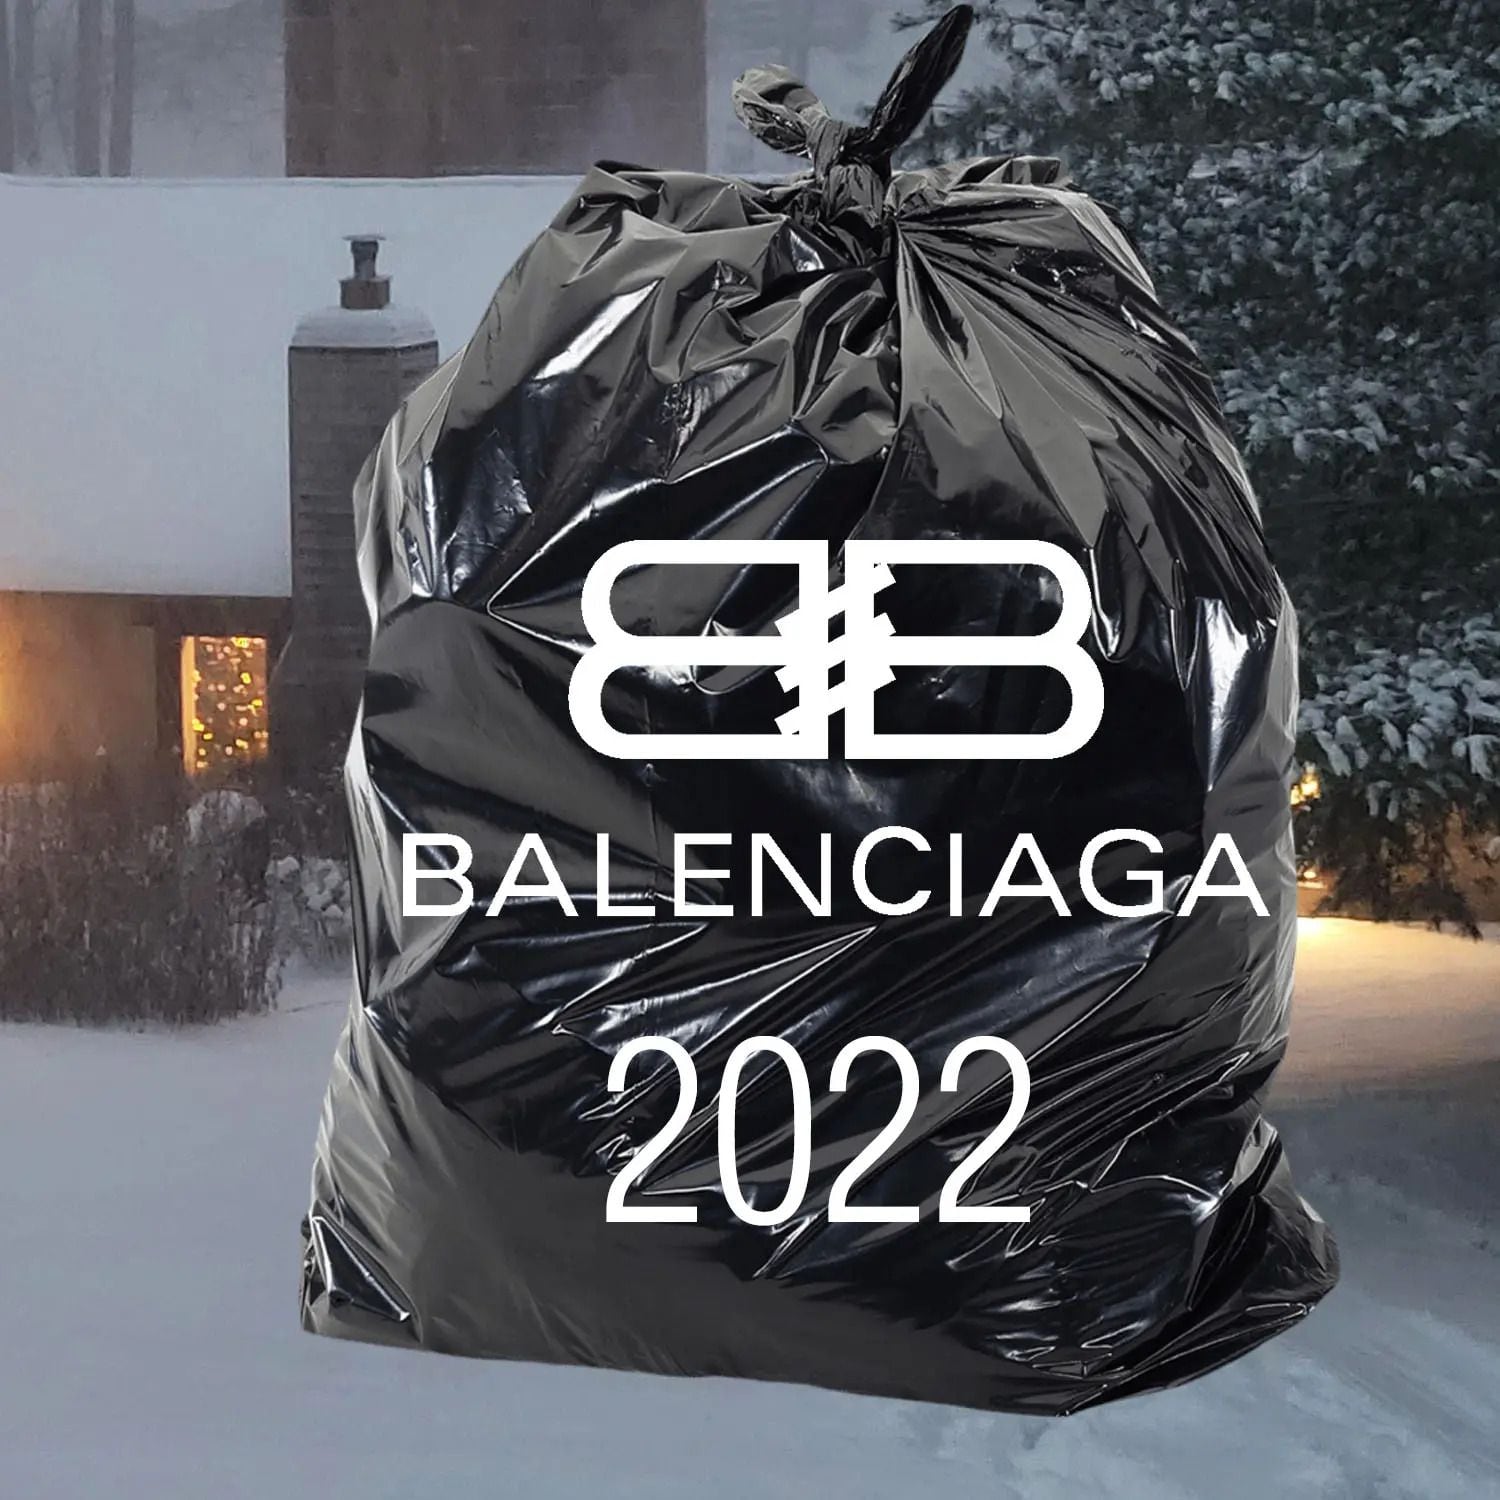 Balenciaga trash bag: Brand sells trash bag worth Rs 1.4 lakh